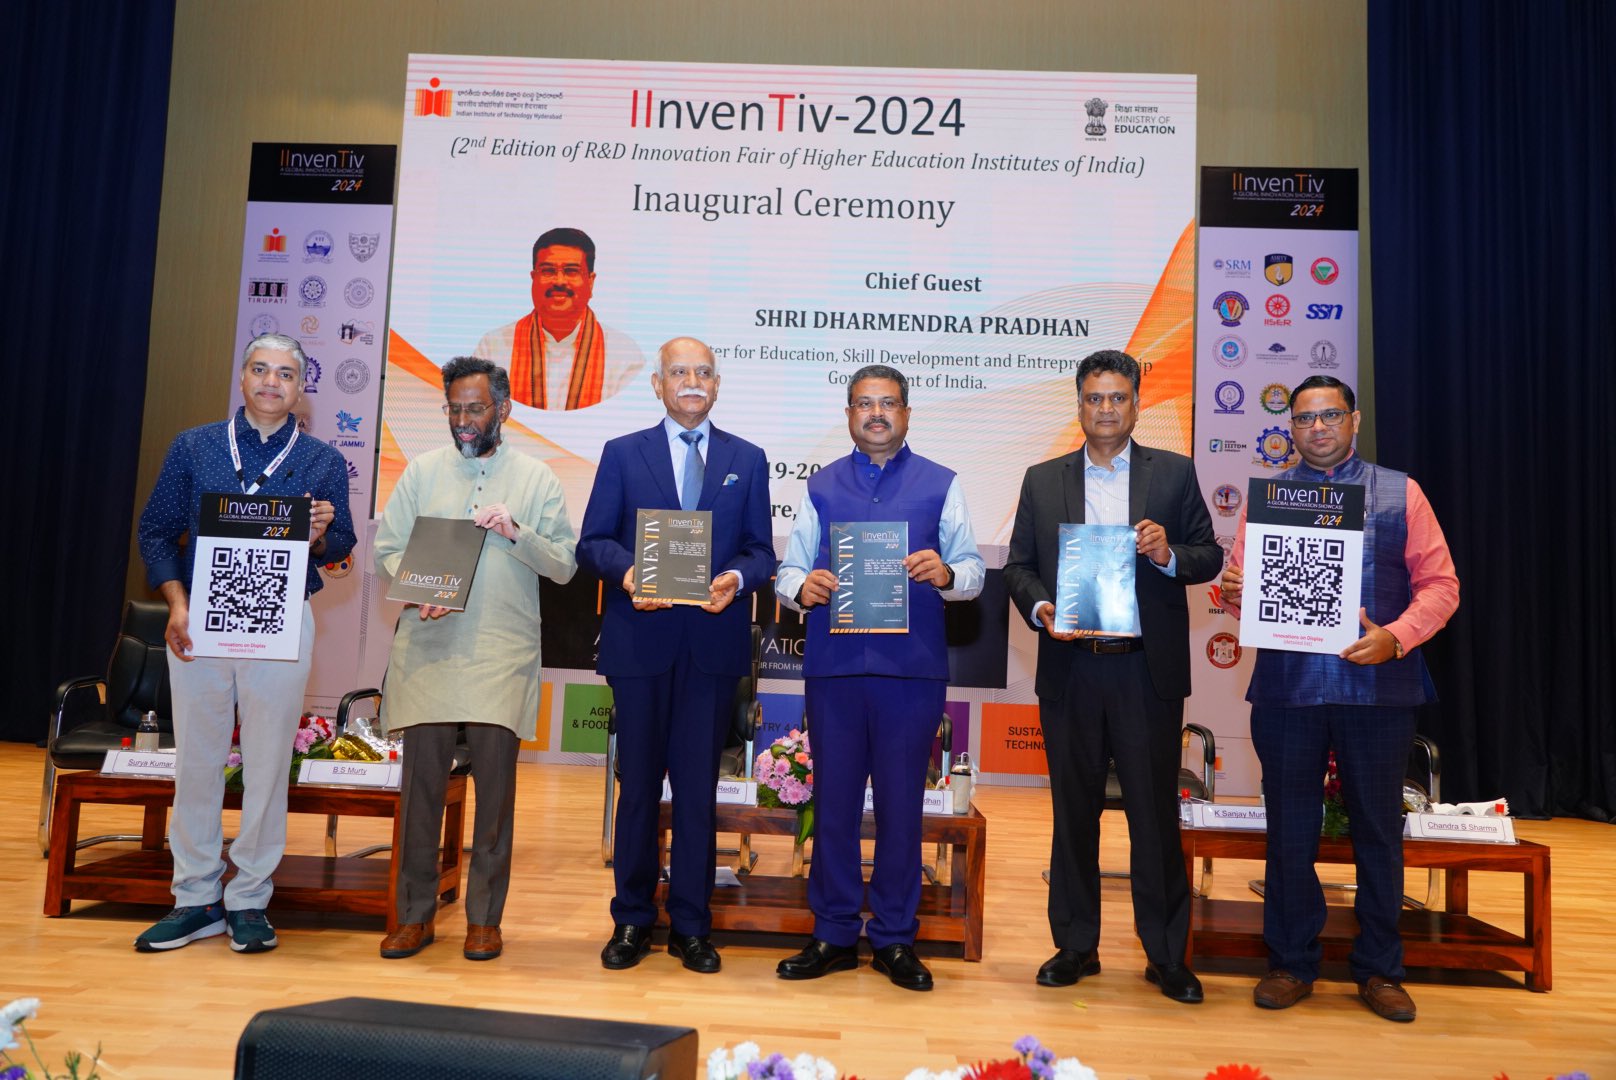 Union Minister Dharmendra Pradhan Inaugurates R&D Innovation Fair "IInvenTiv-2024 at IIT Hyderabad